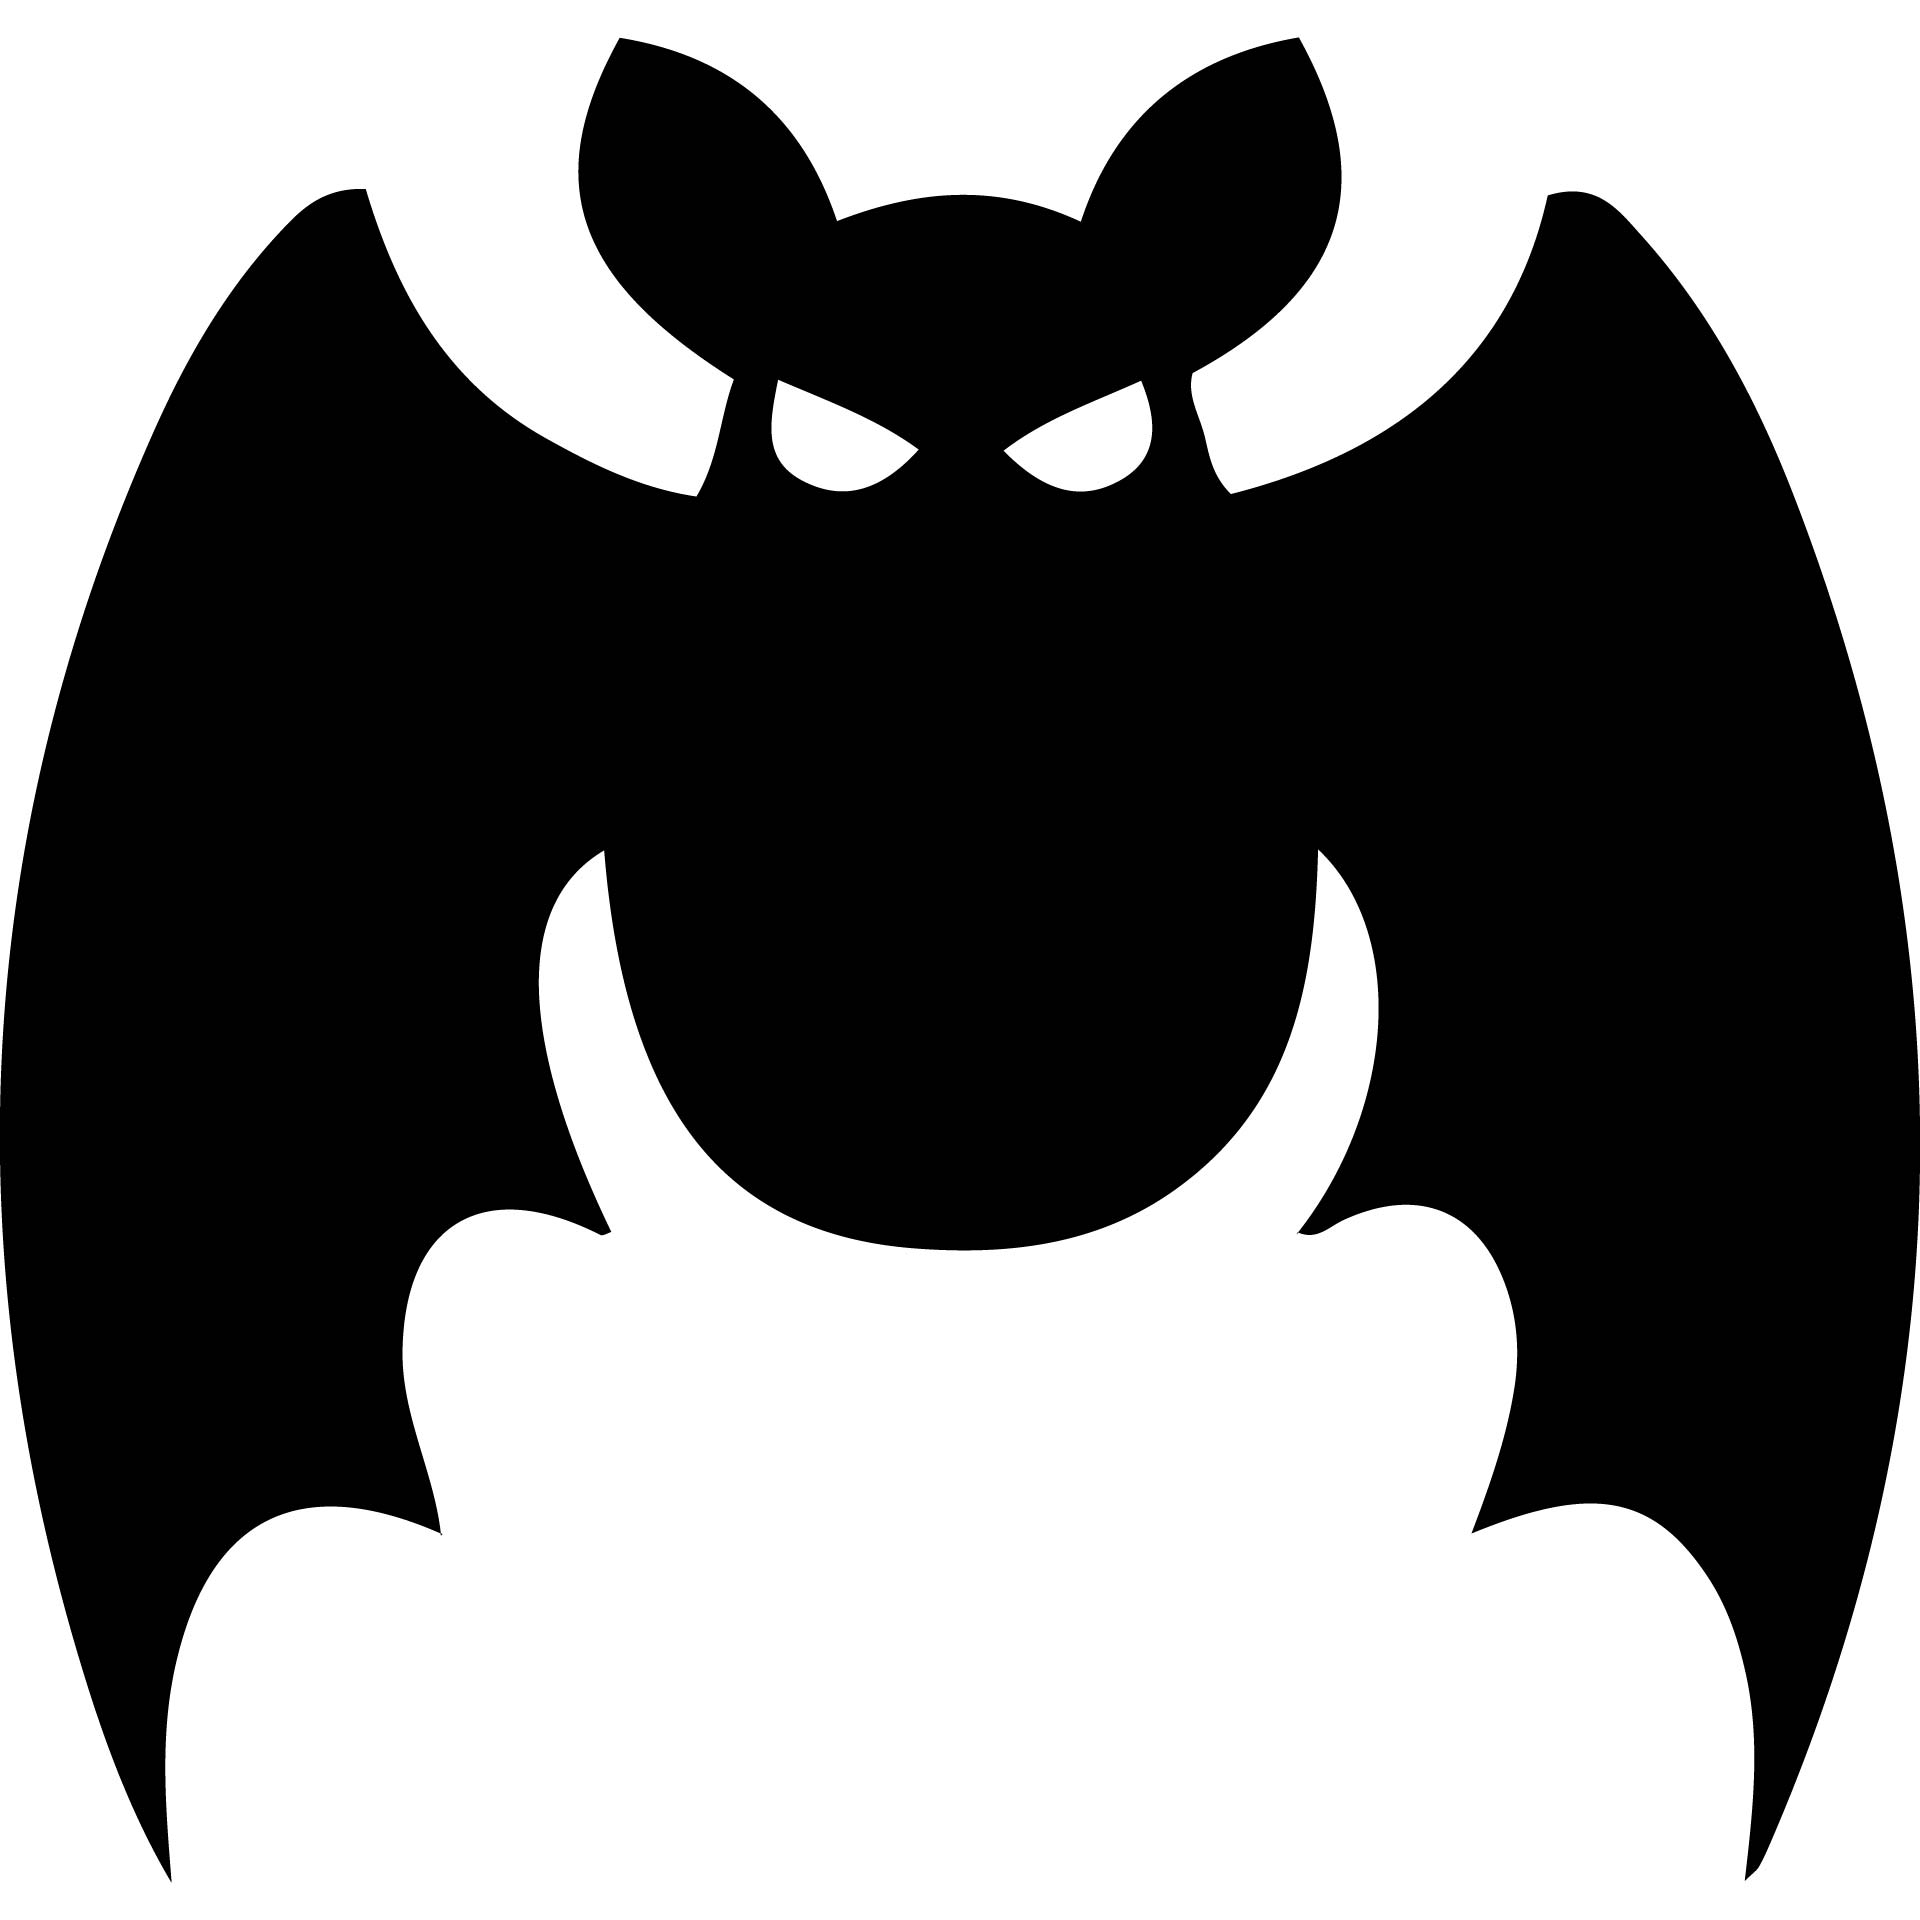 8 Best Images of Bats For Bat Stencils Printable Free Printable Bat